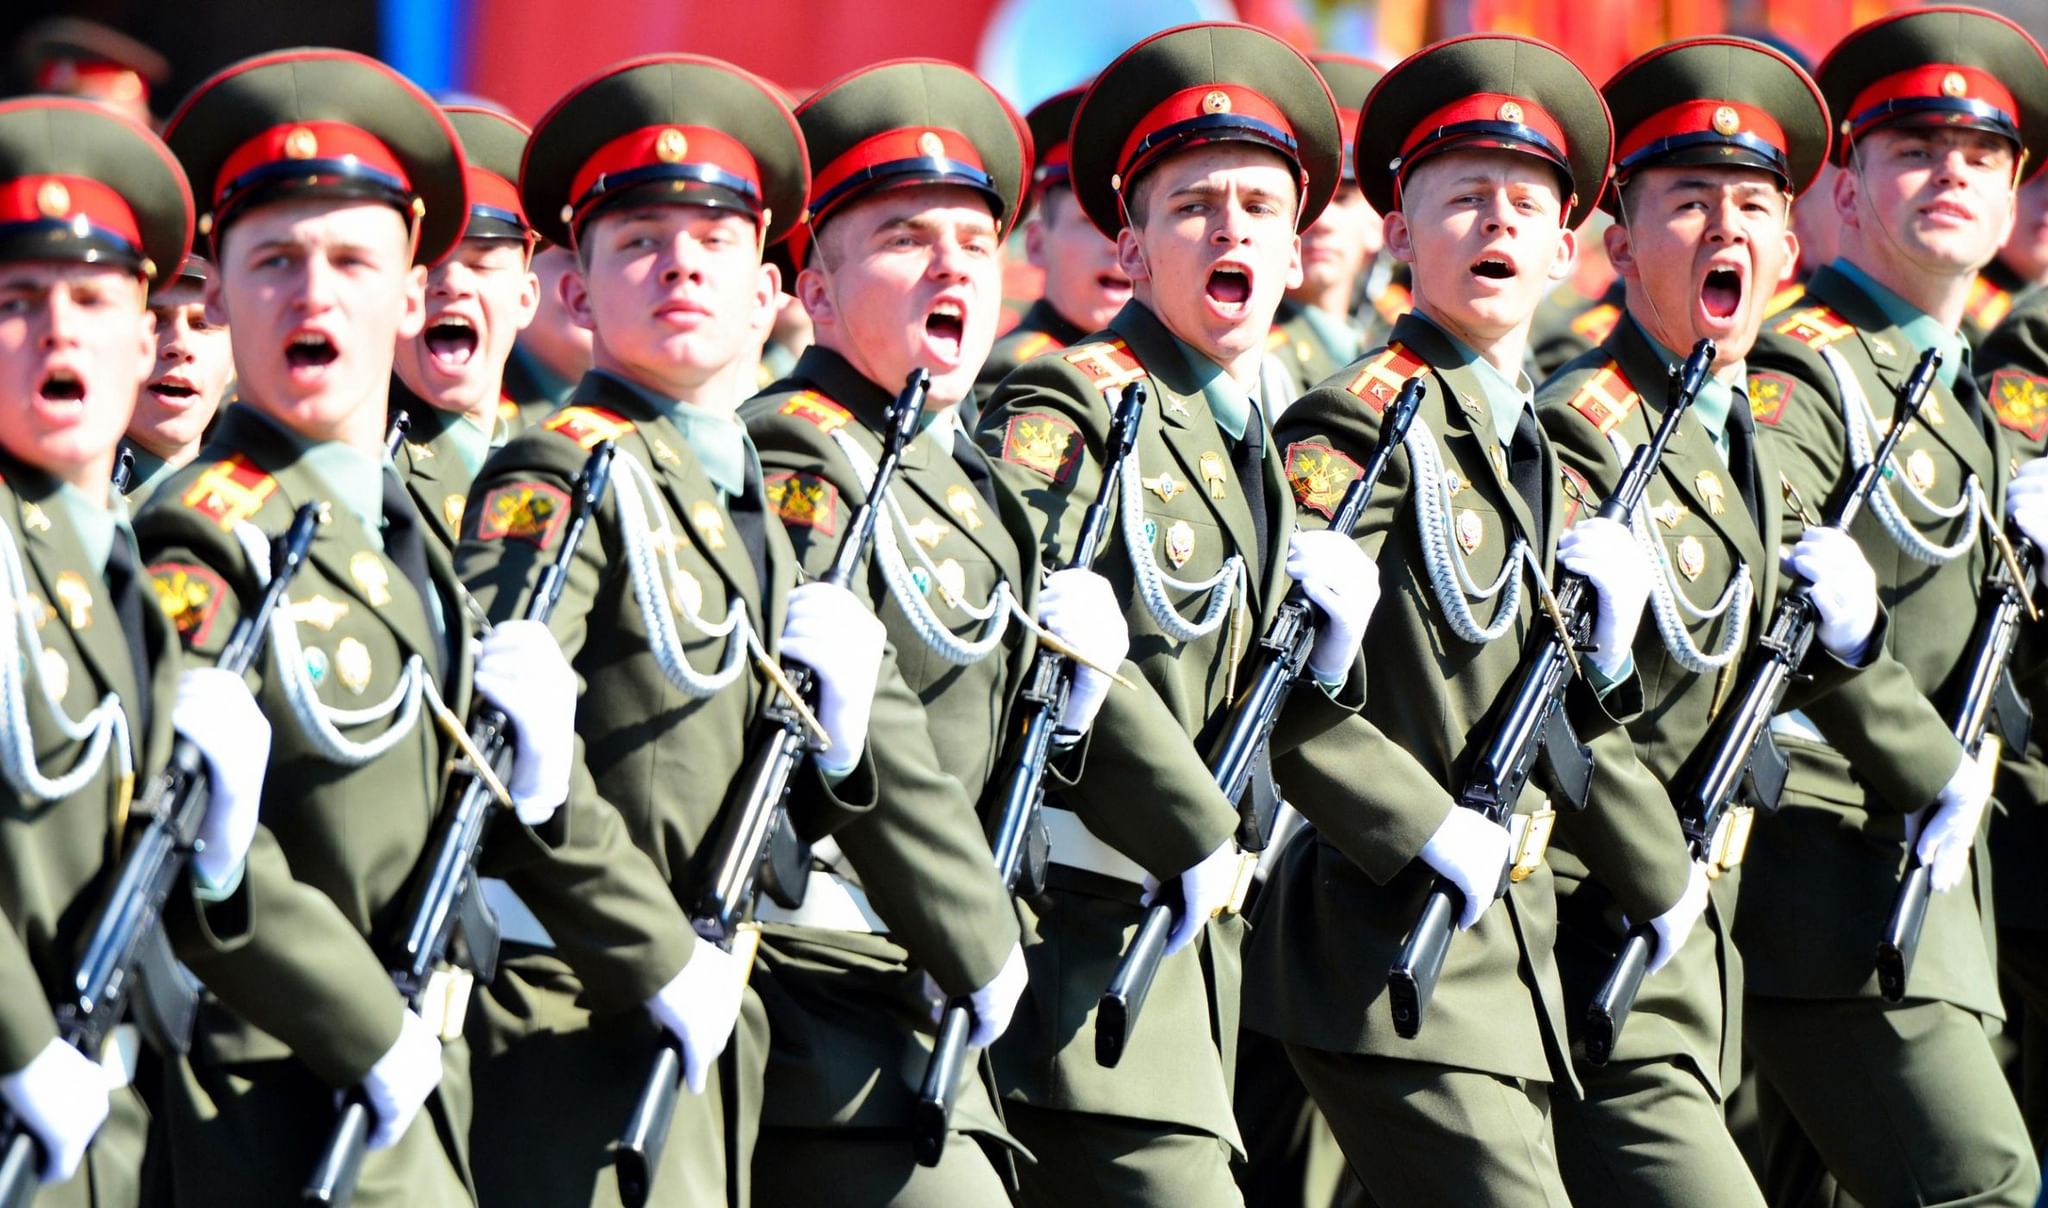 Военные шагают. Солдаты на параде. Солдаты маршируют. Российский солдат на параде. Русские солдаты на параде.